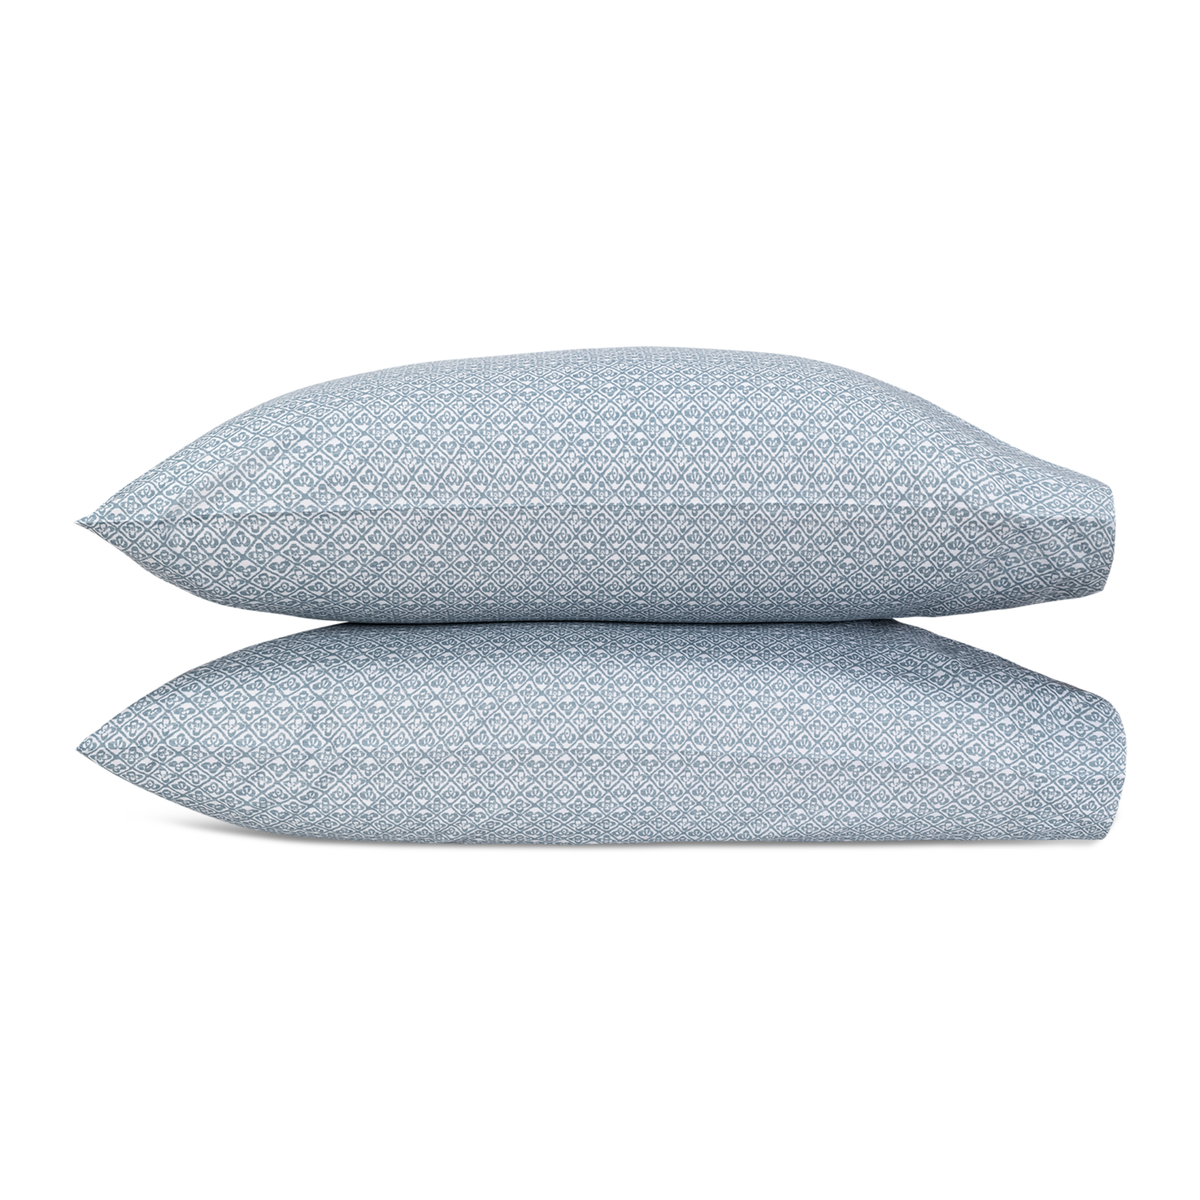 Pair of Pillowcases of Matouk Schumacher Catarina Bedding in Hazy Blue Color